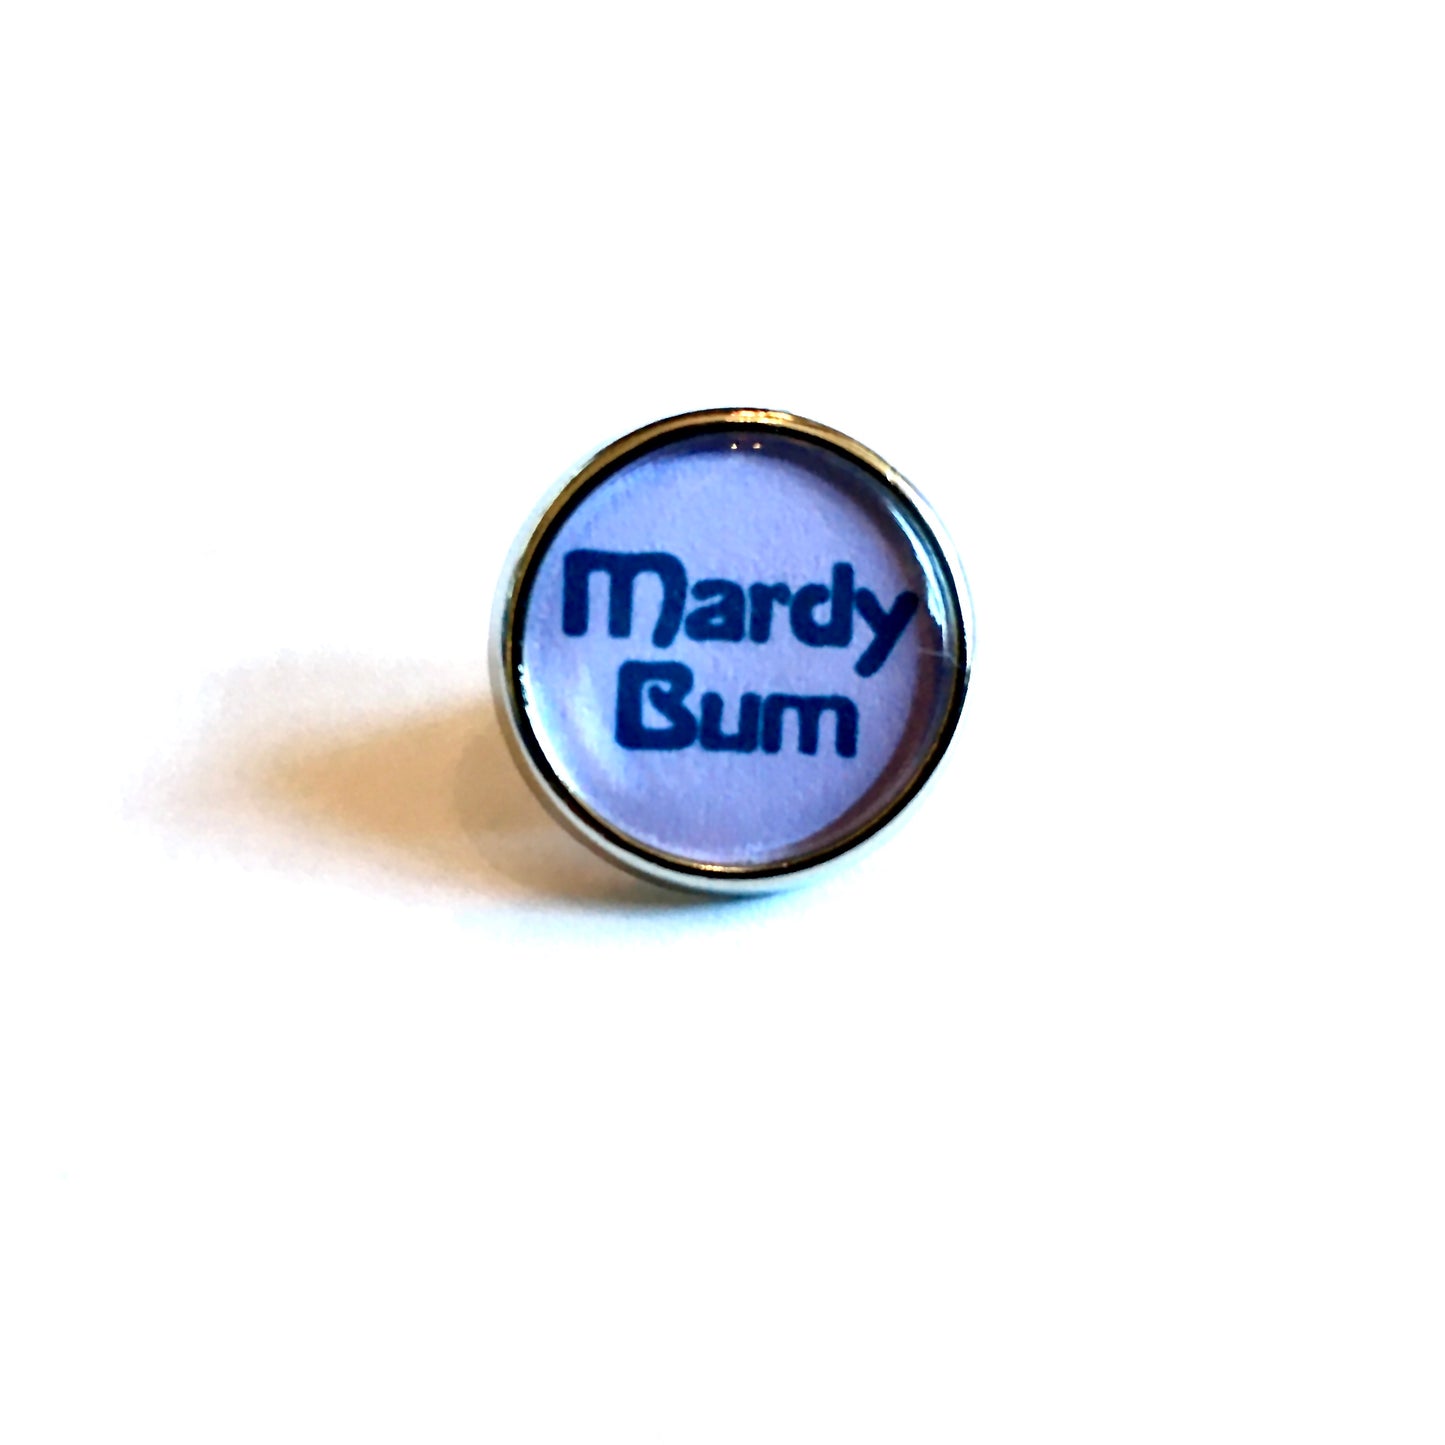 Mardy Bum Lapel Pin